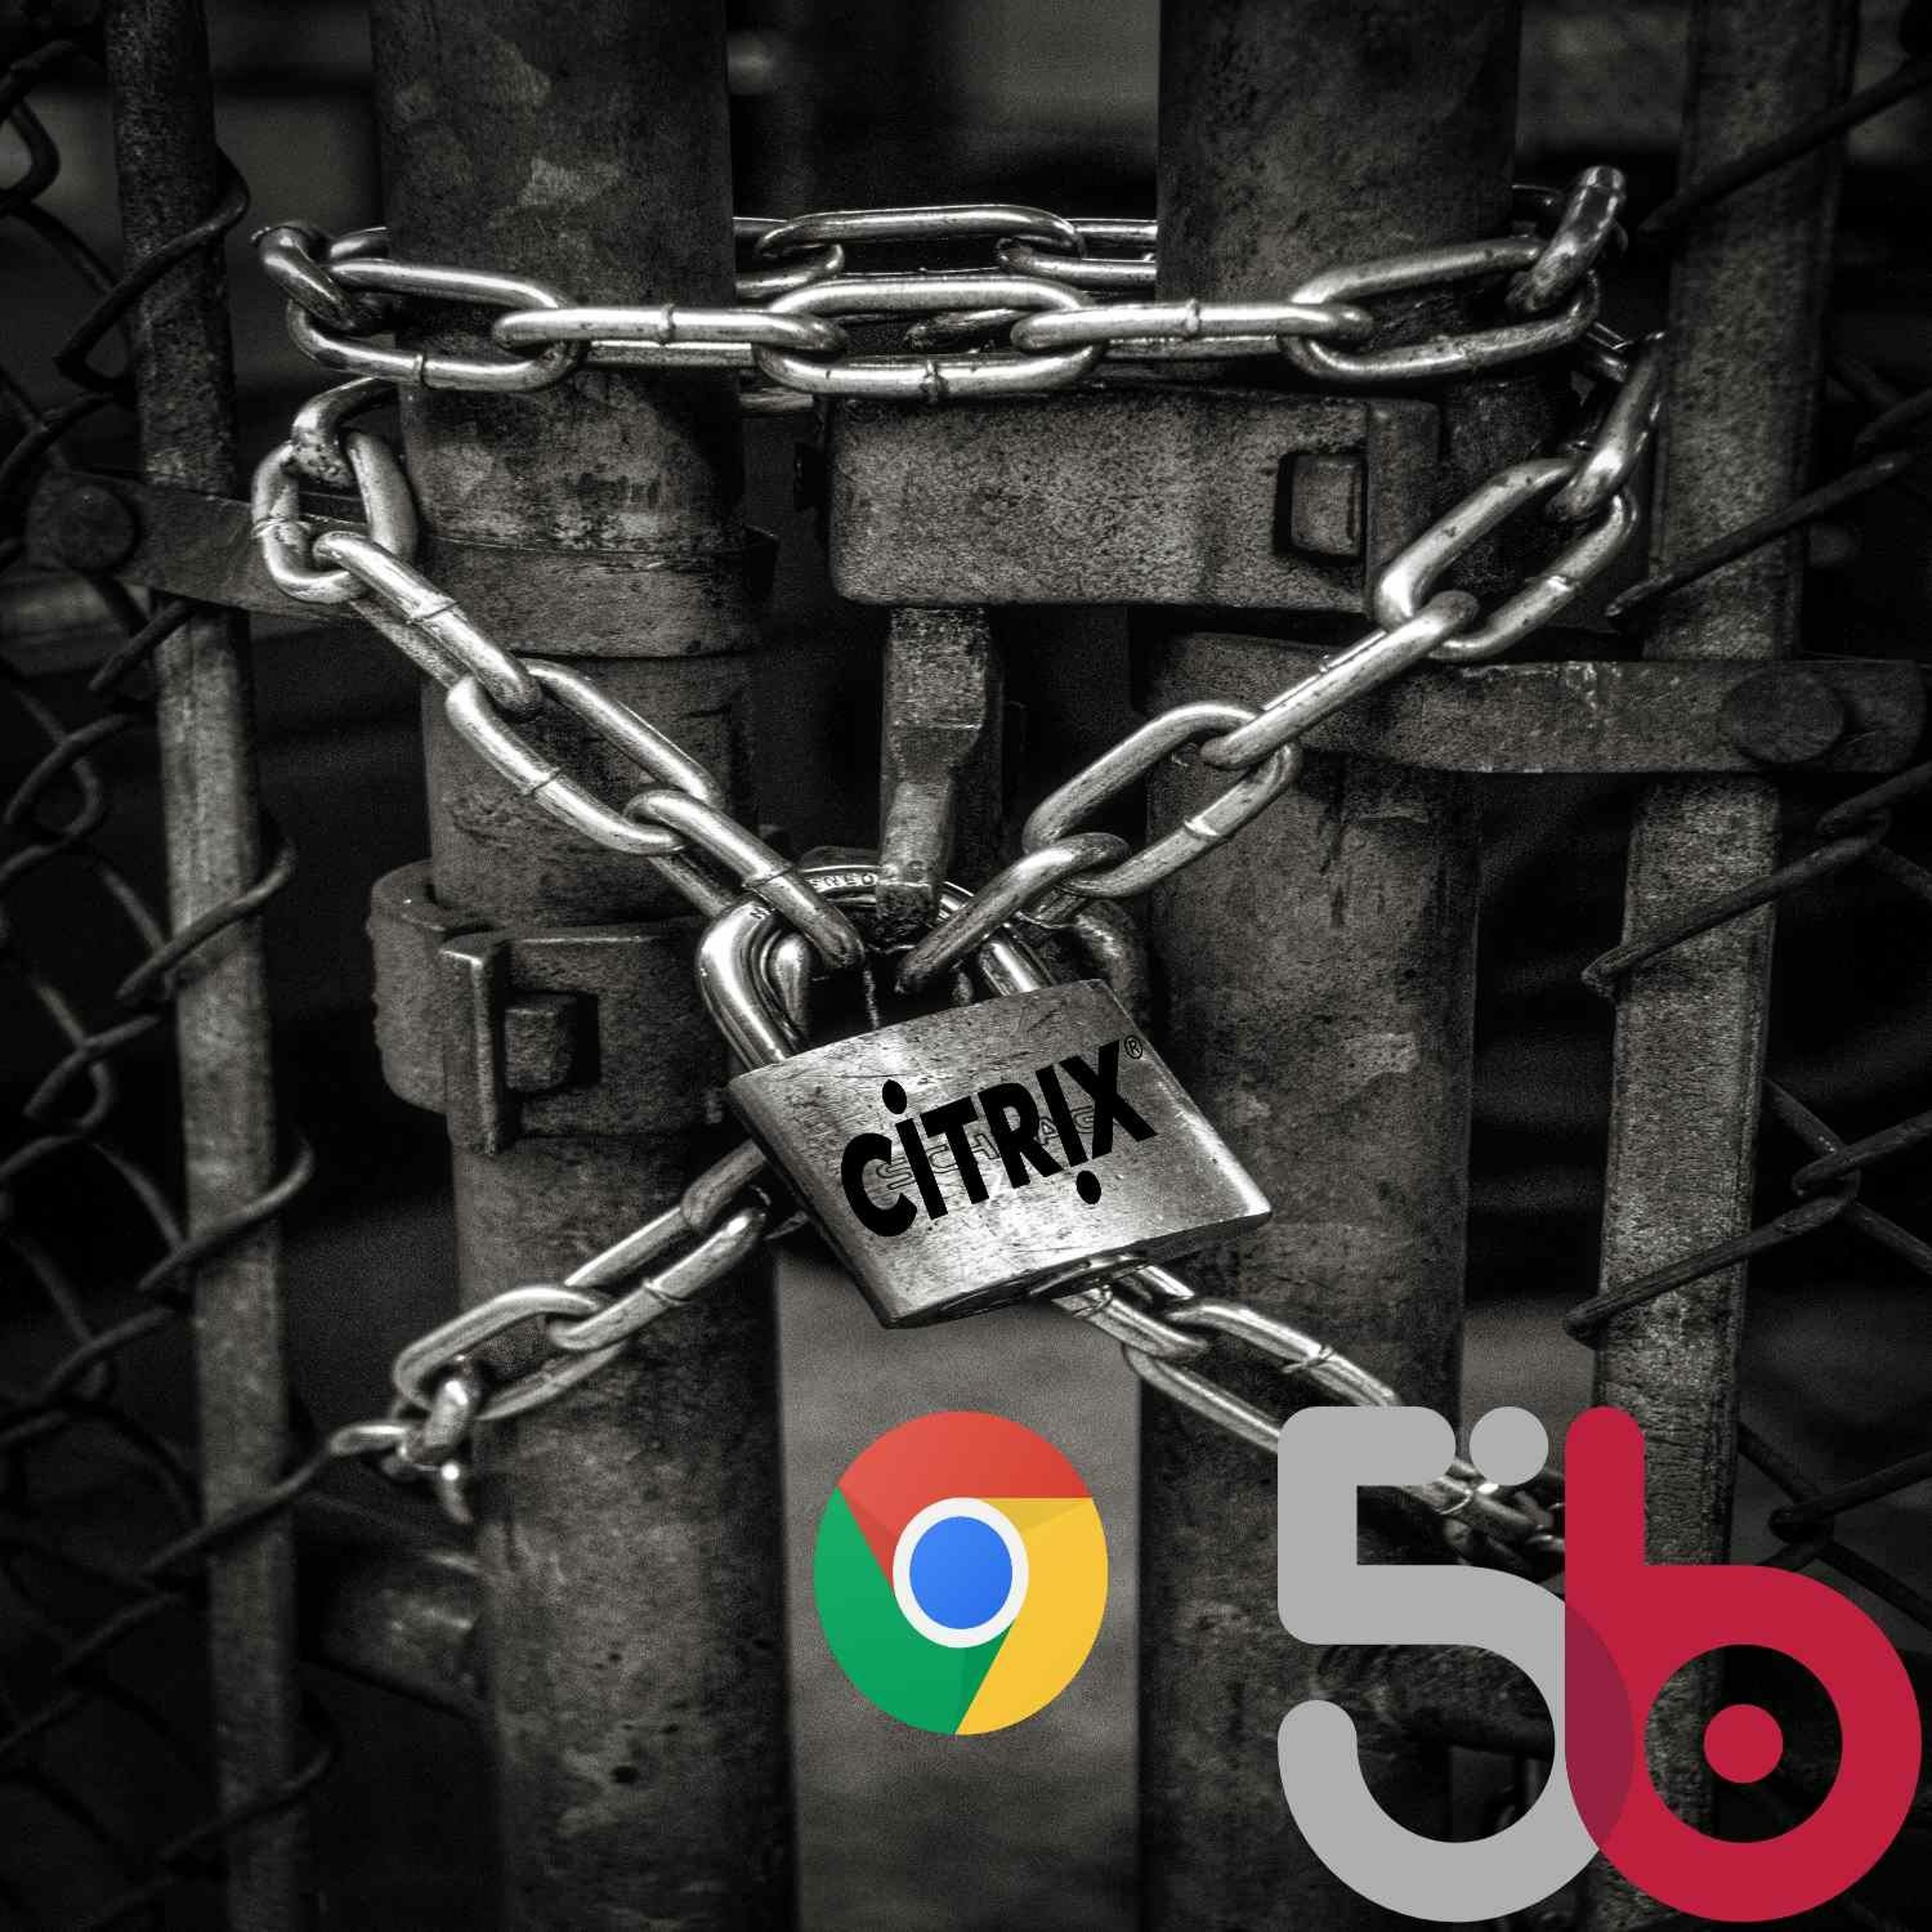 Citrix Internal Network Breach, Chrome Zero Day, NGINX Acquisition & More